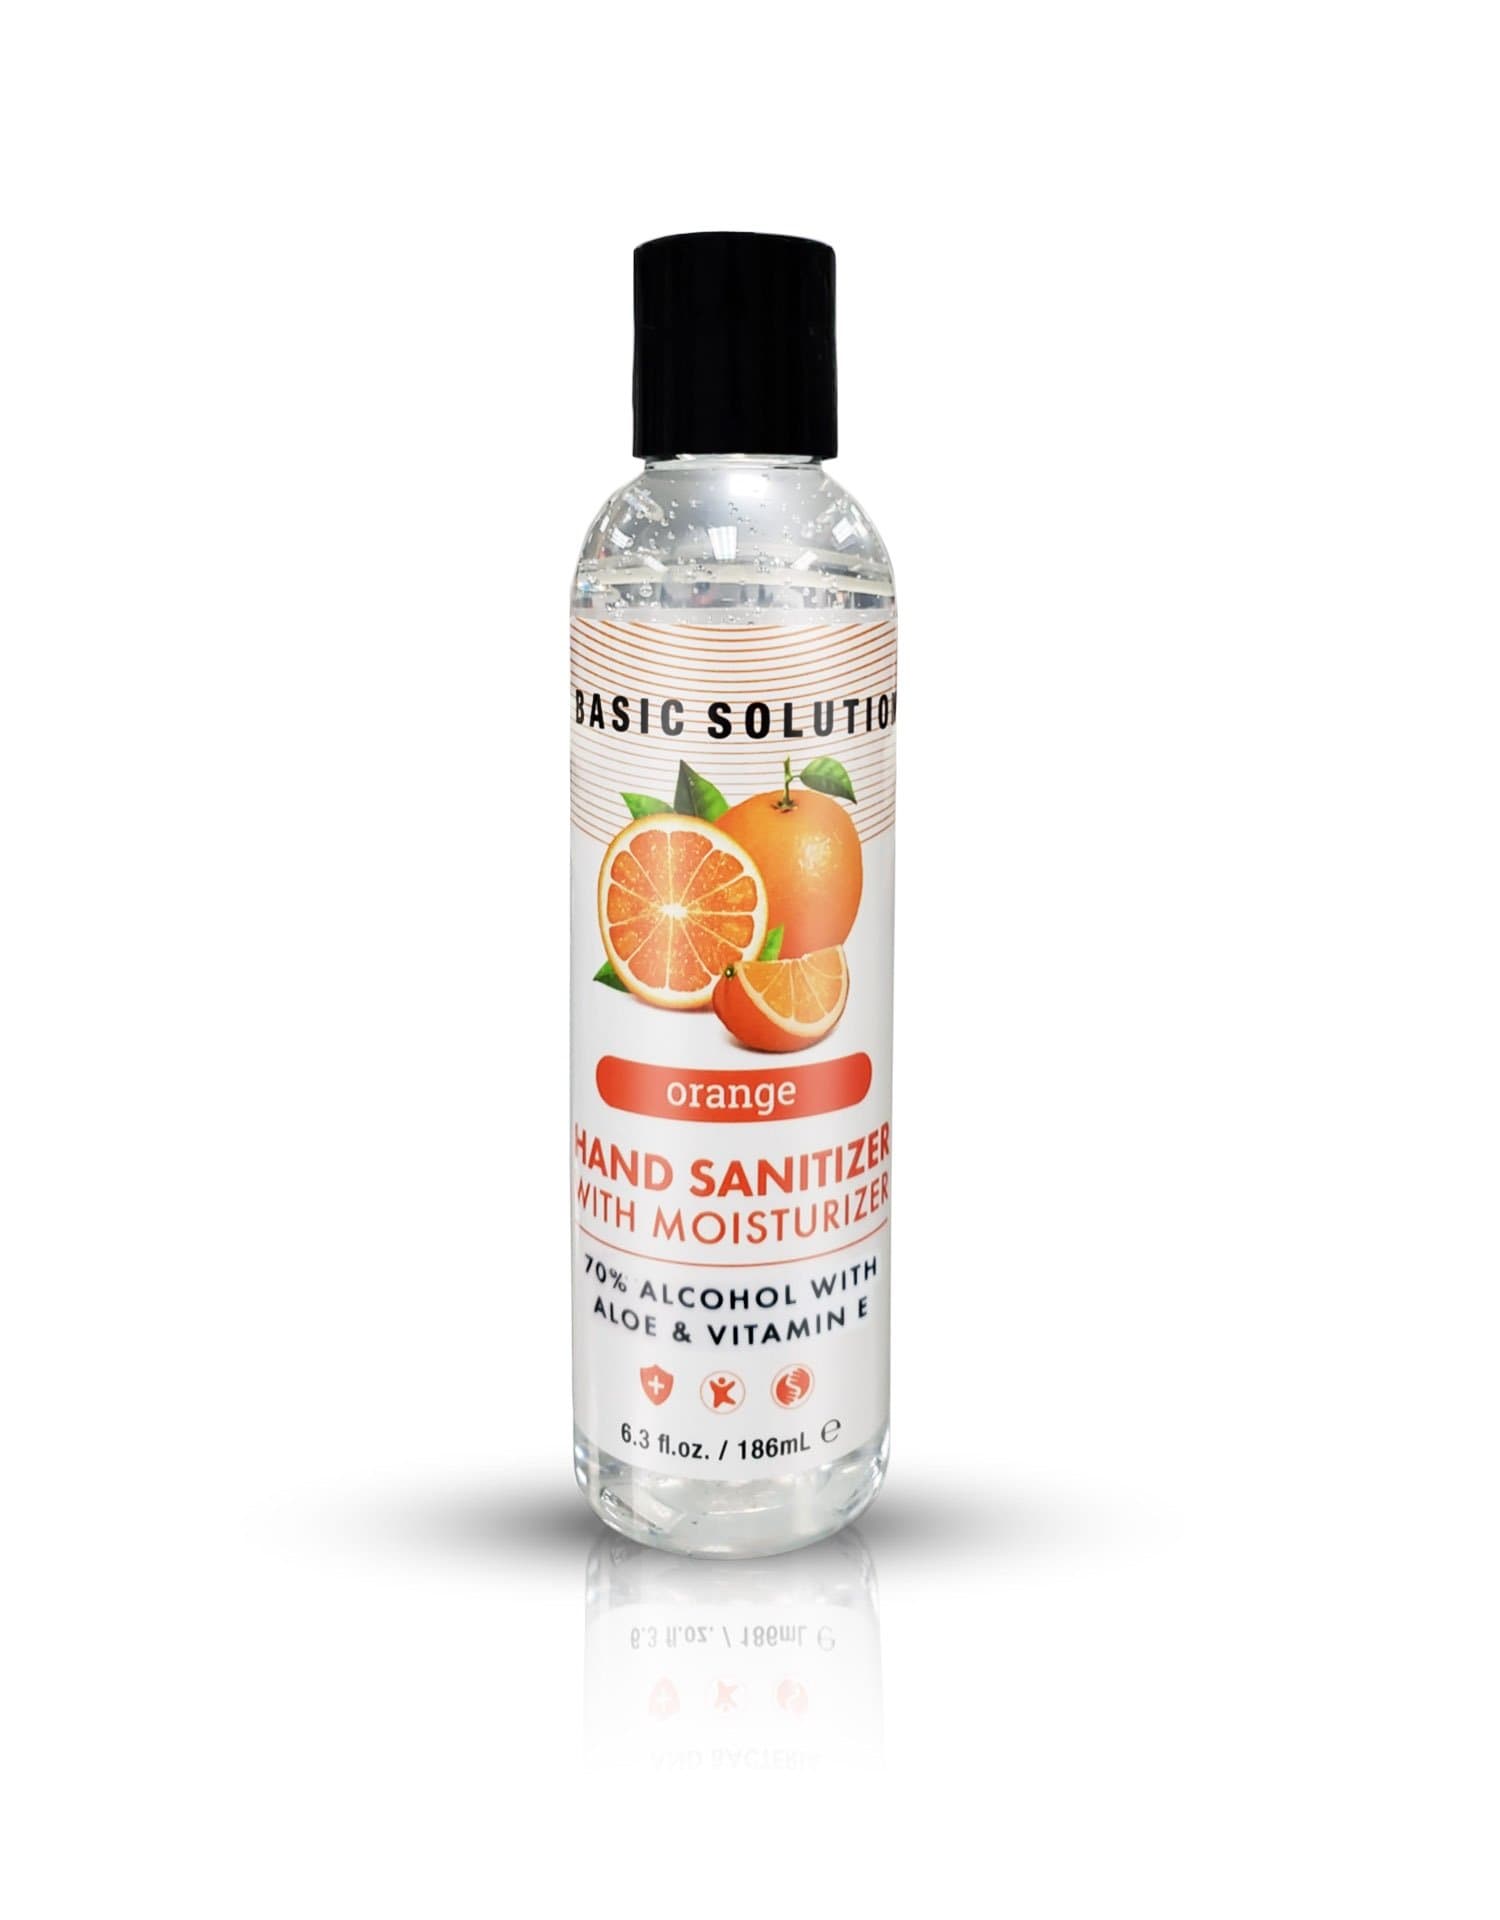 basic solutions hand sanitizer with moisturizer orange 6 3 oz